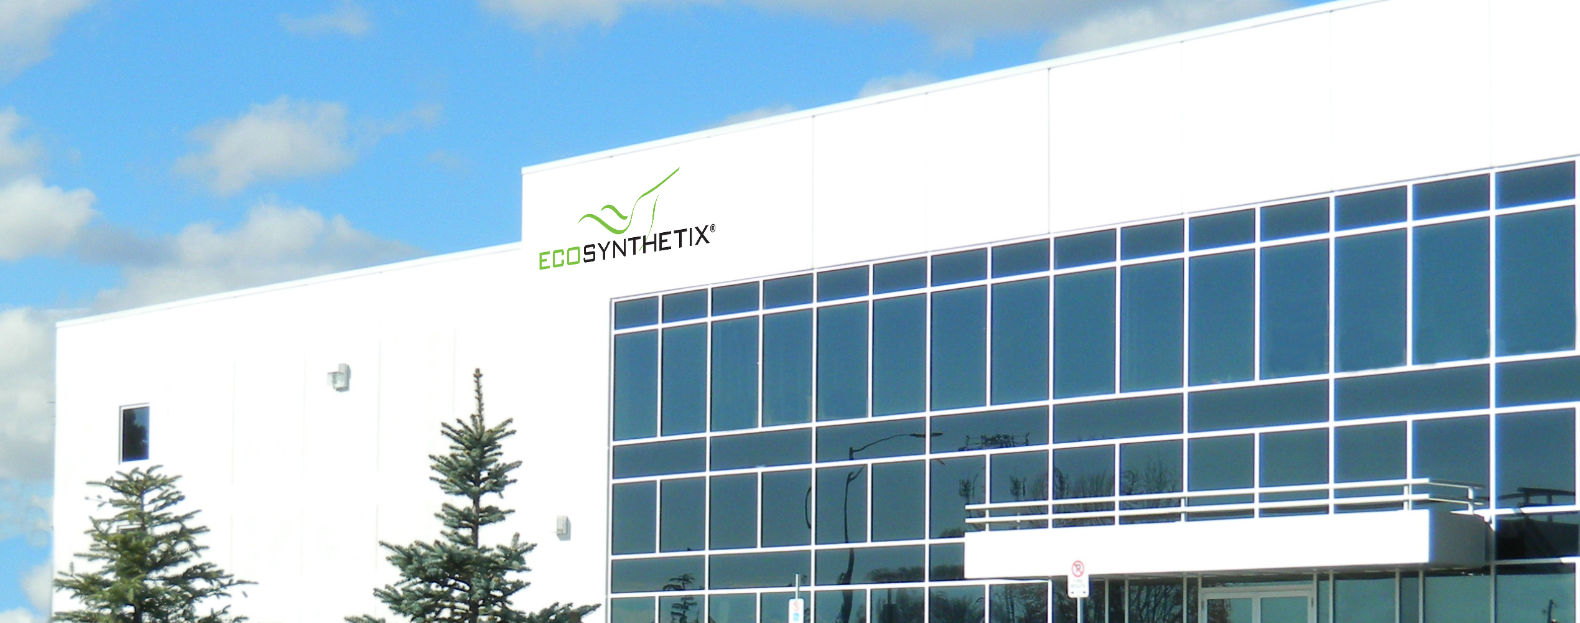 Ecosynthetix building